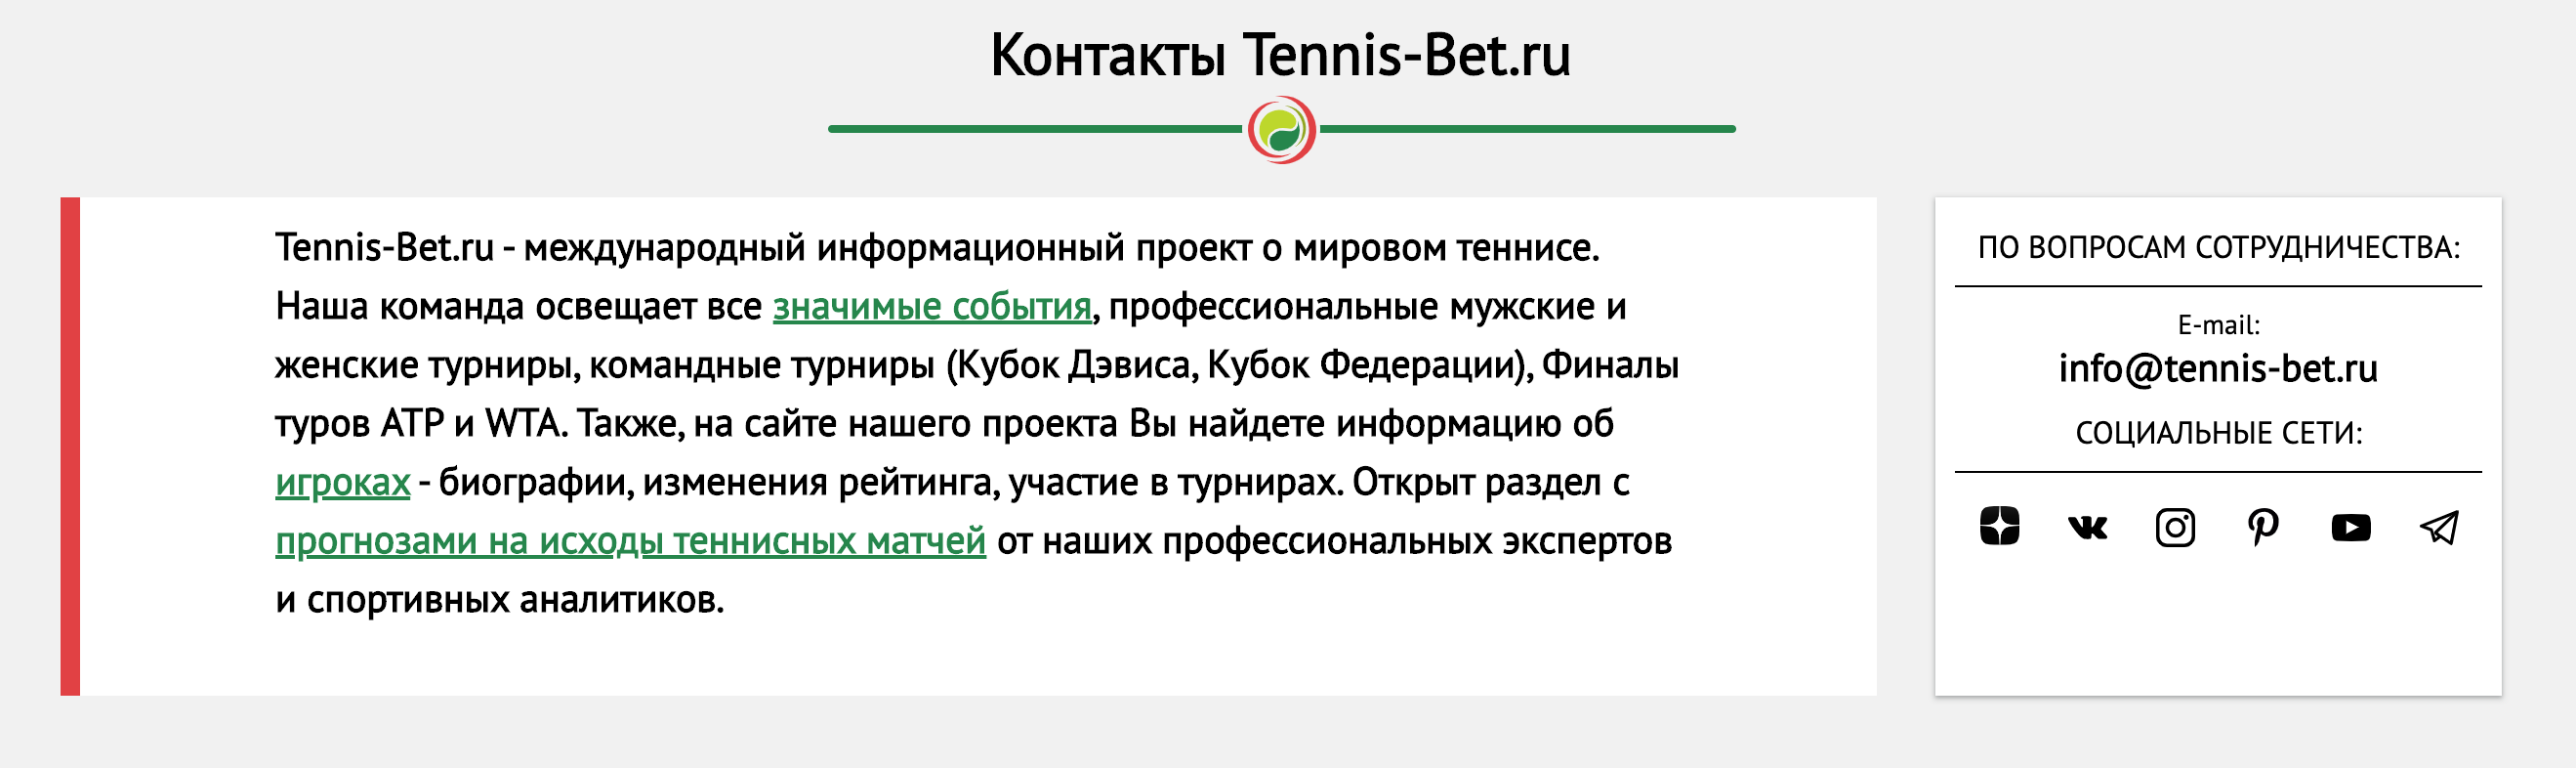 Контакты Tennis-bet.ru